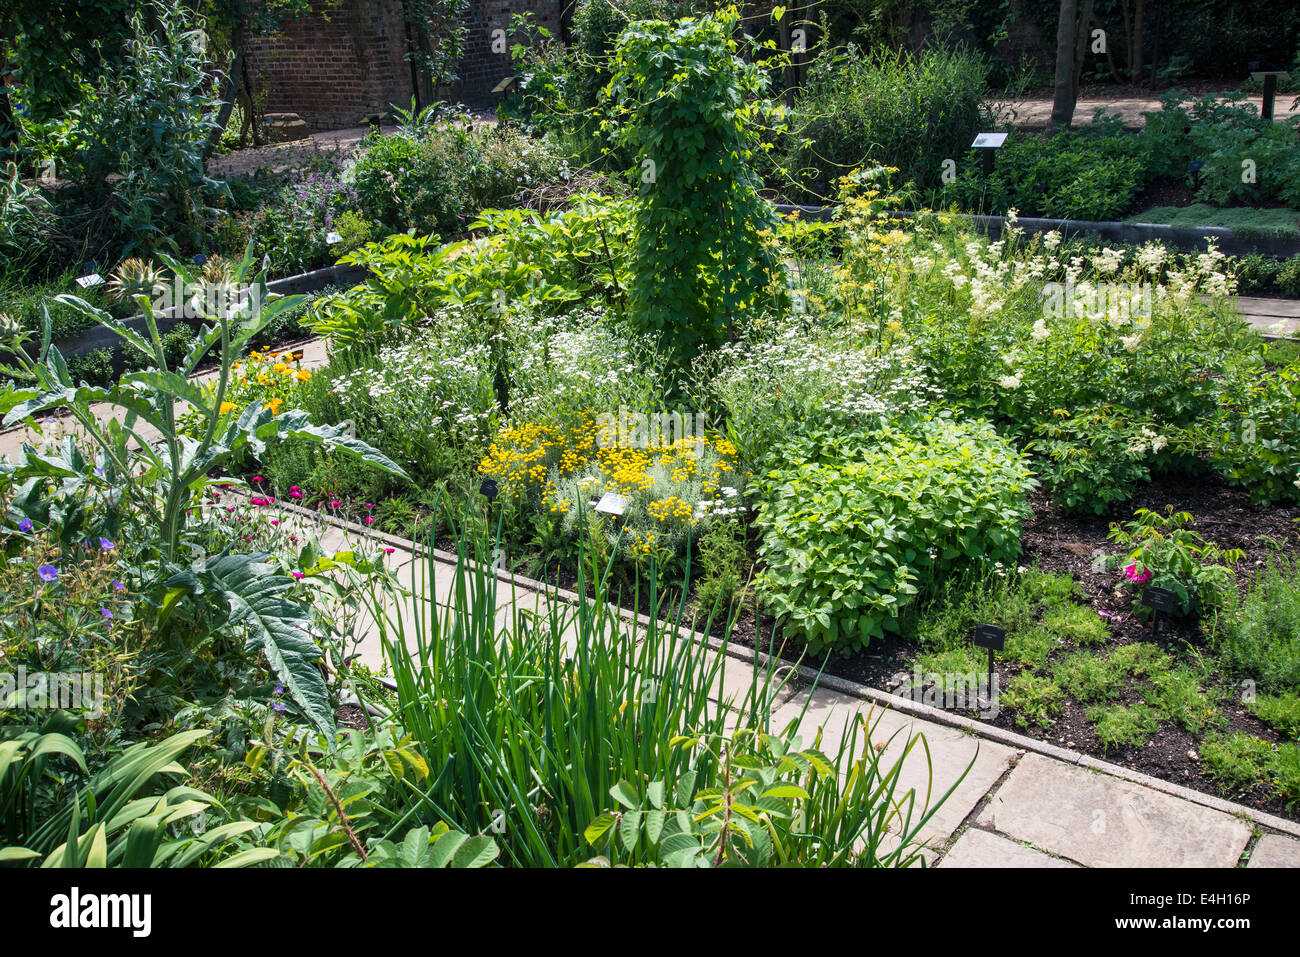 herb garden uk stock photos & herb garden uk stock images - alamy